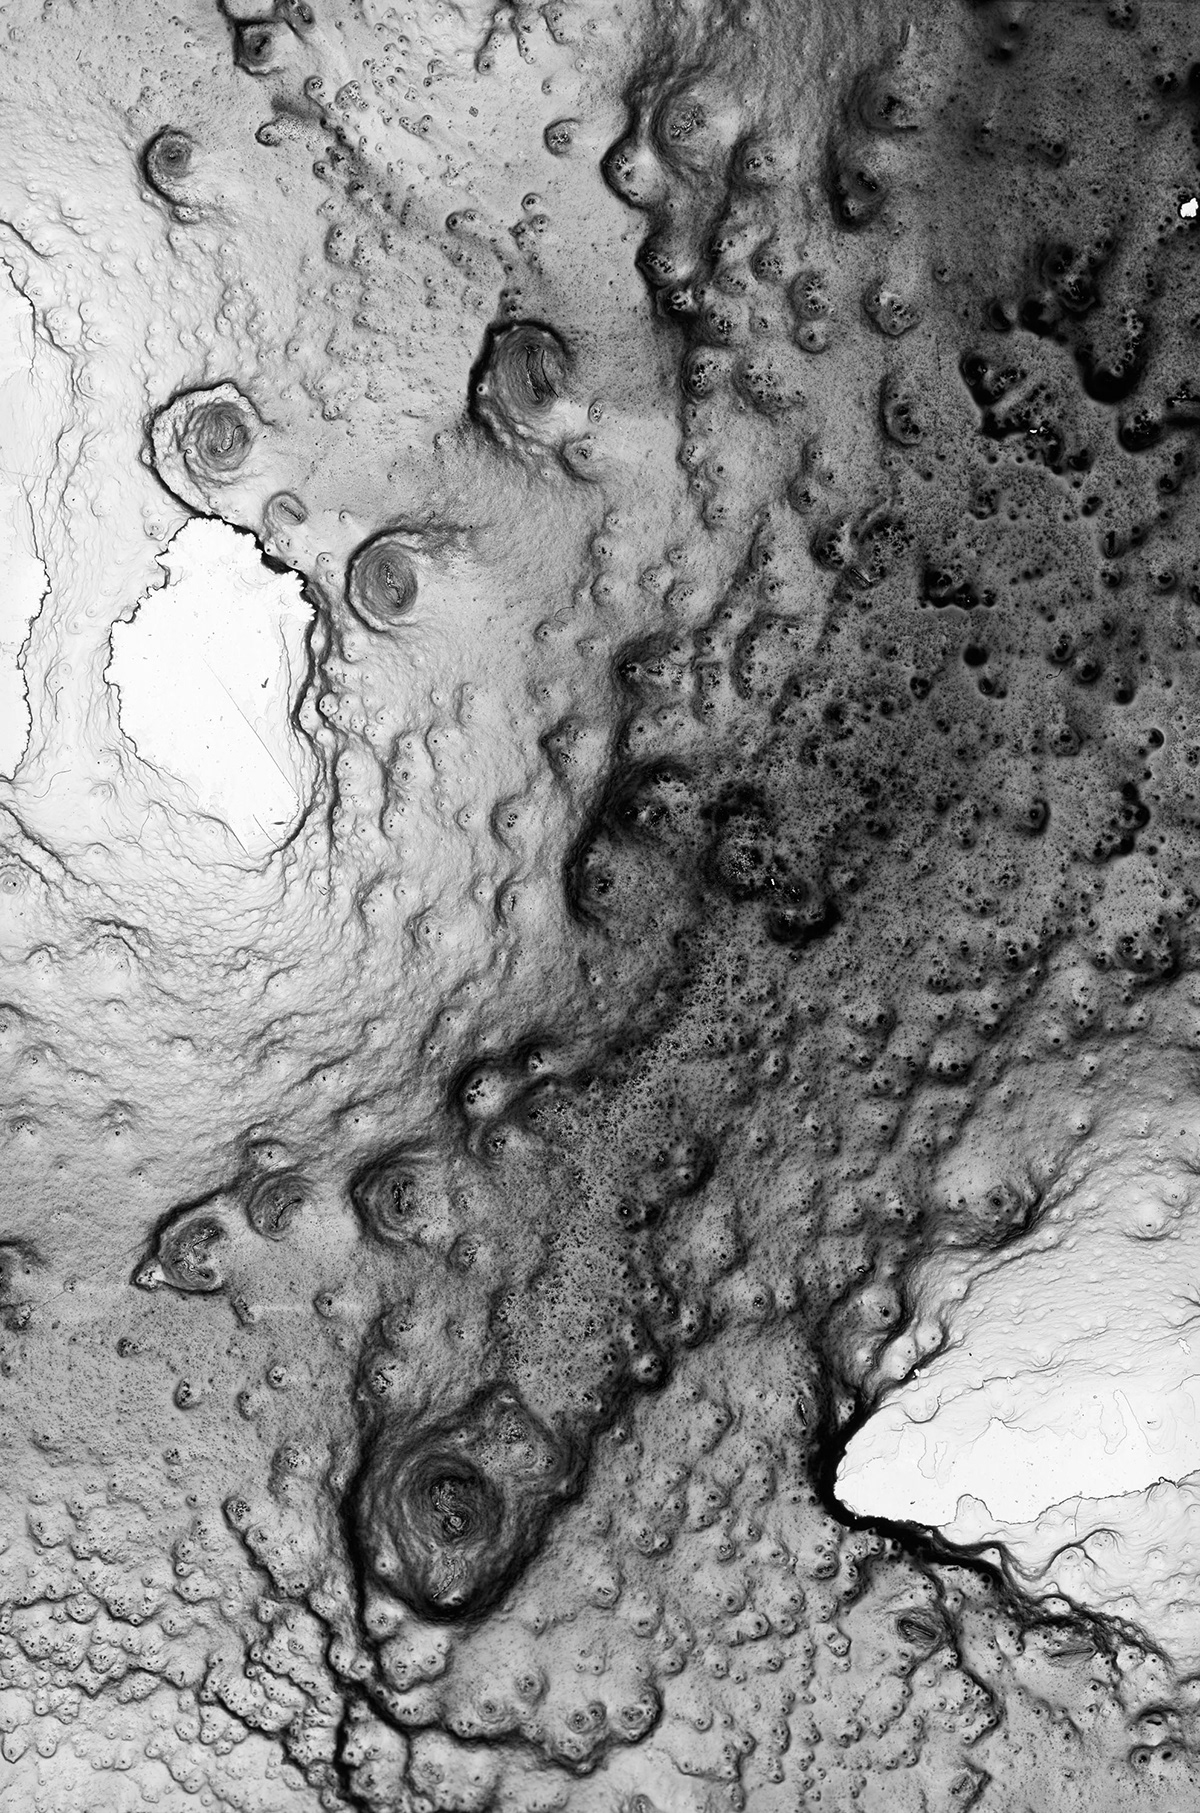 ink washes damian vancamp New York risd pattern fluid topography morph microscopic macroscopic virus chemistry creative concept design Landscape